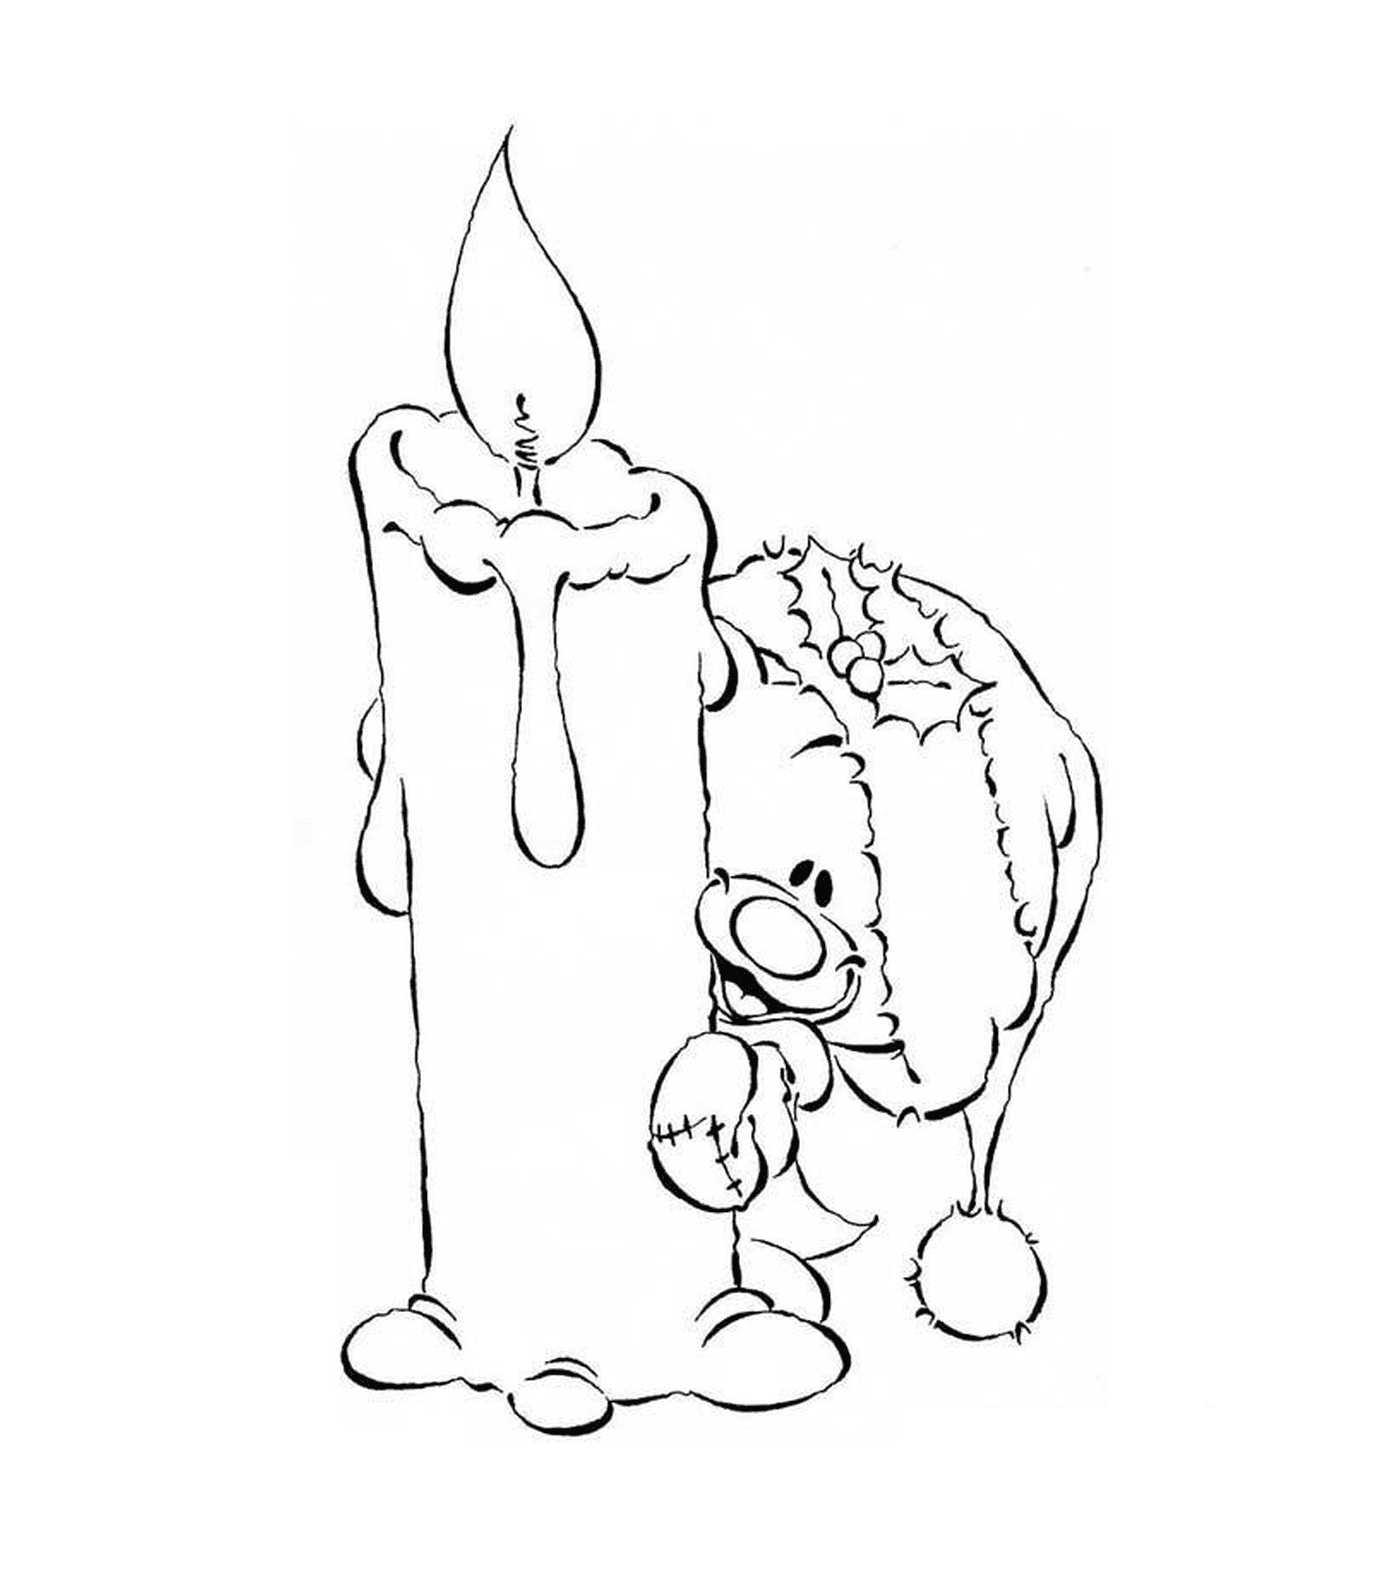  Un osito de peluche junto a una vela encendida 